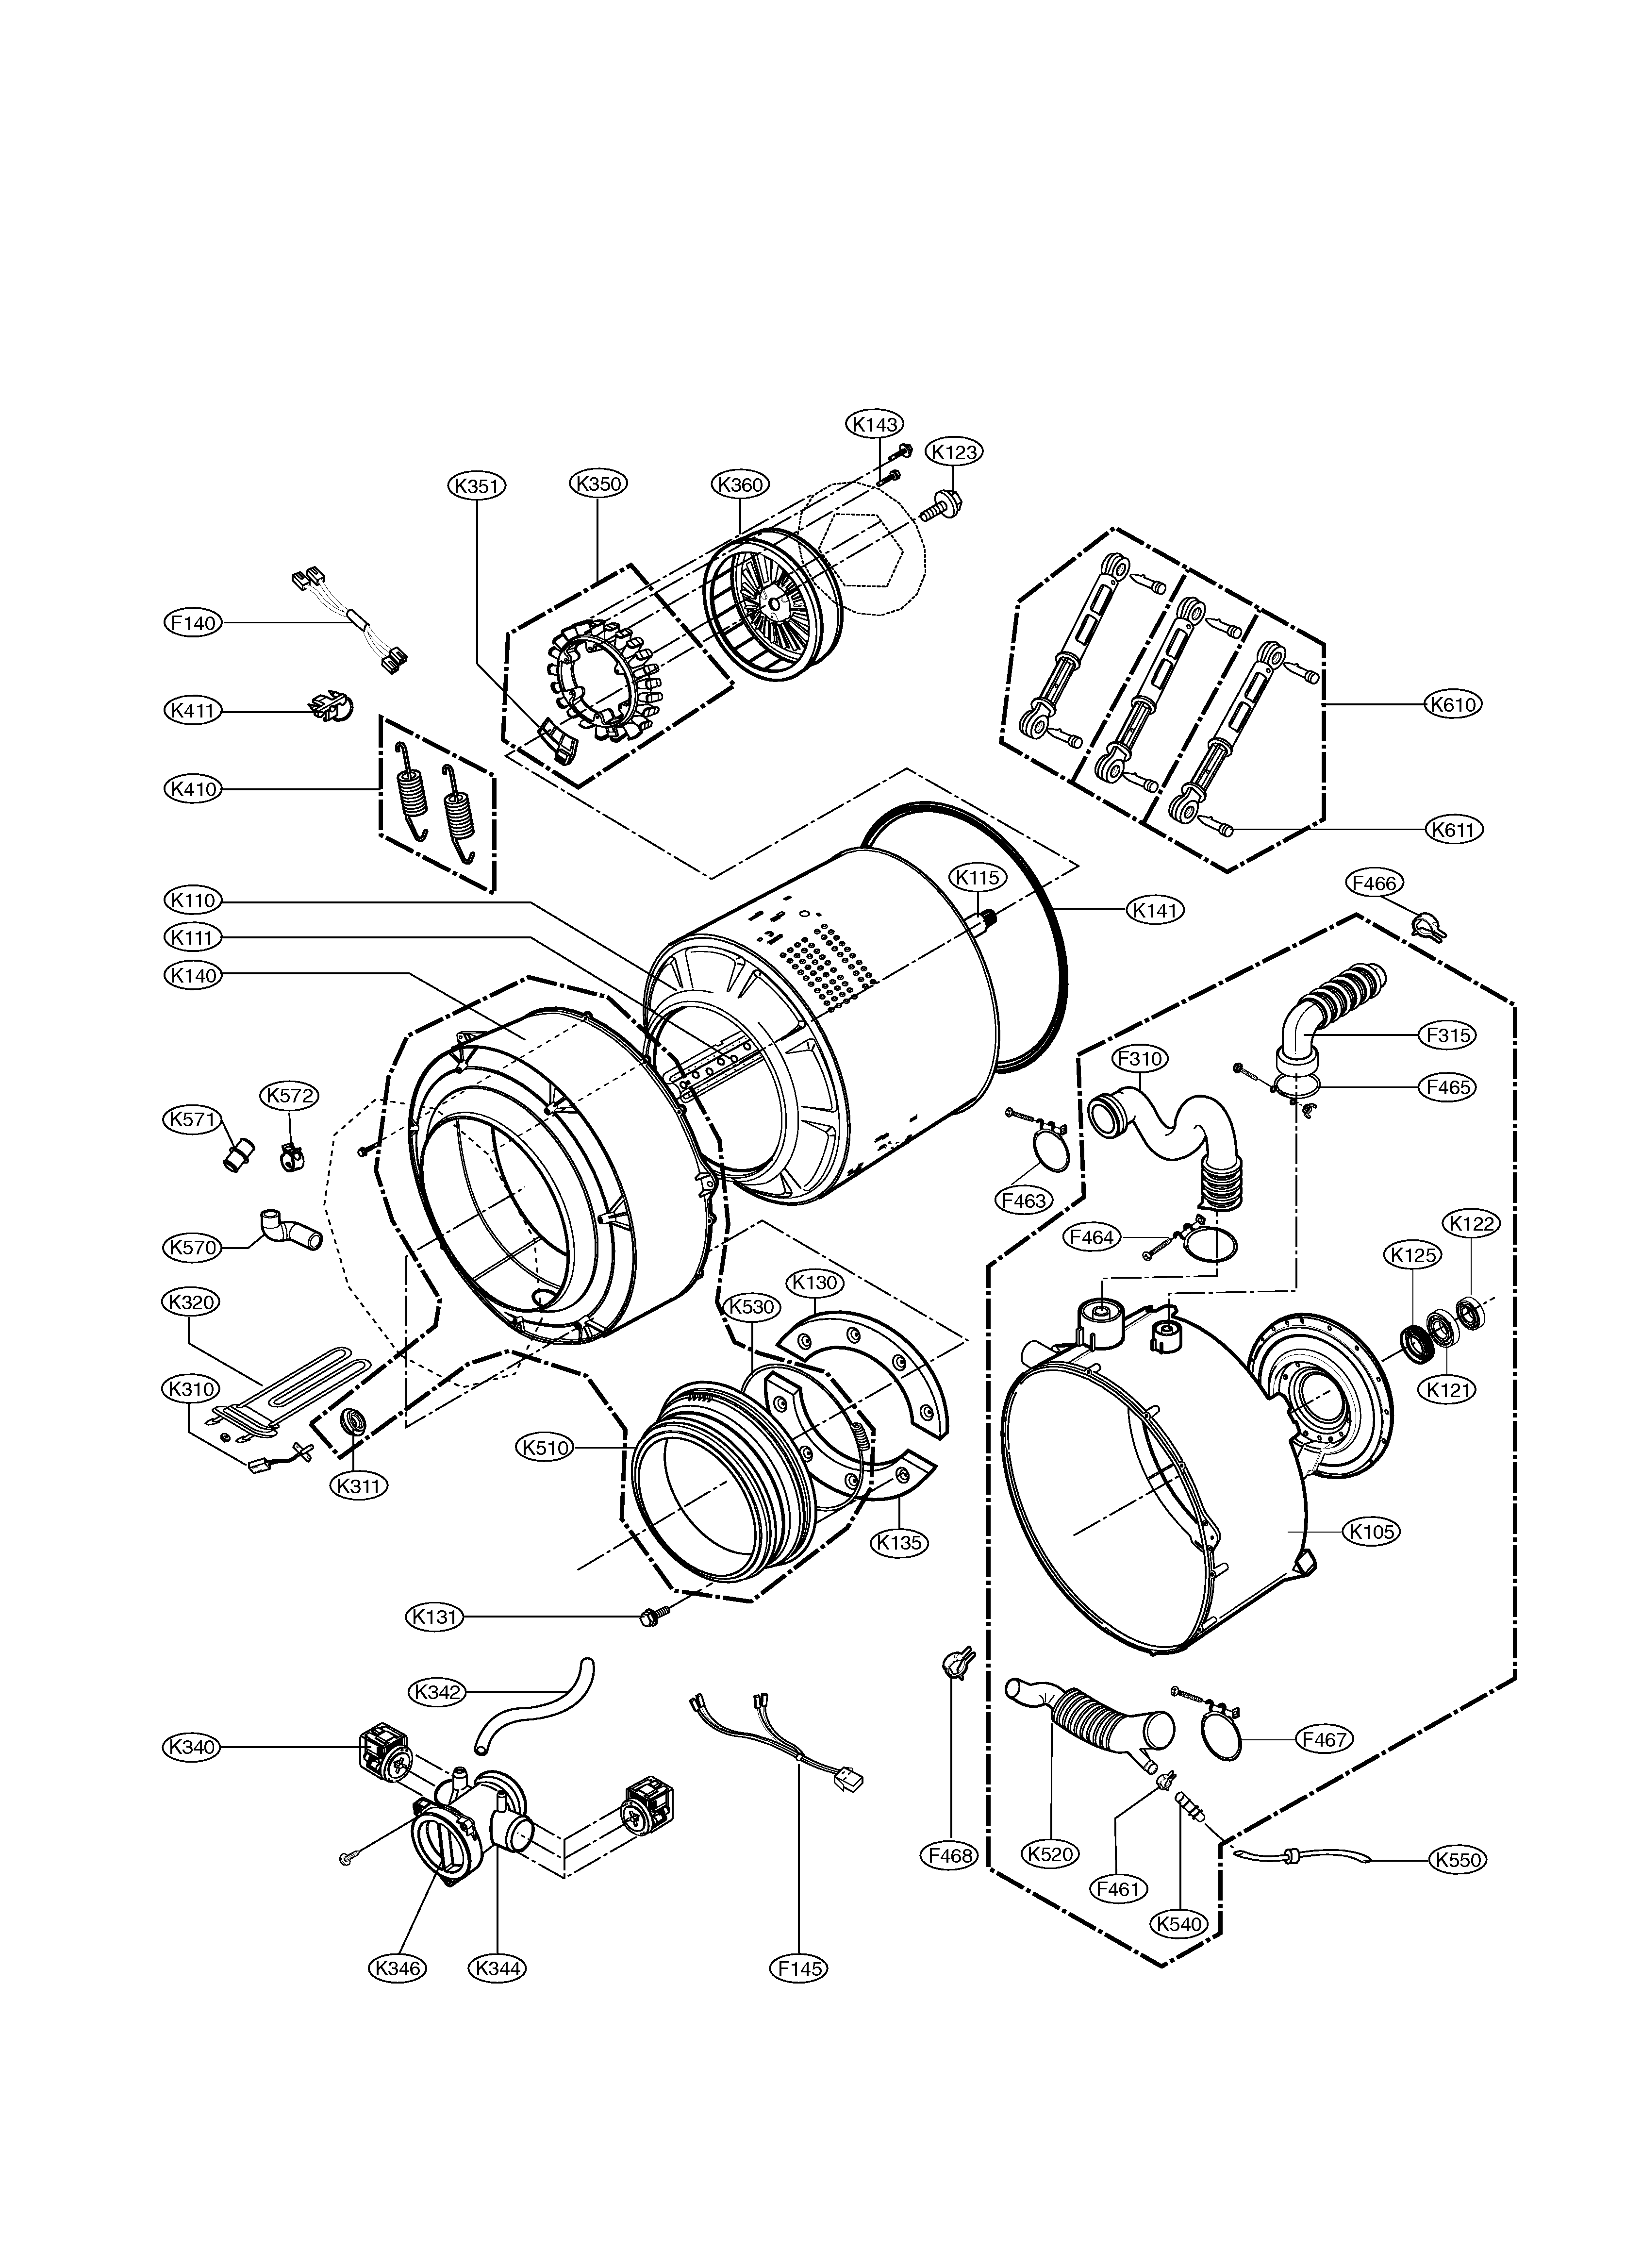 Lg Wm2233hs Washer Parts Sears Partsdirect